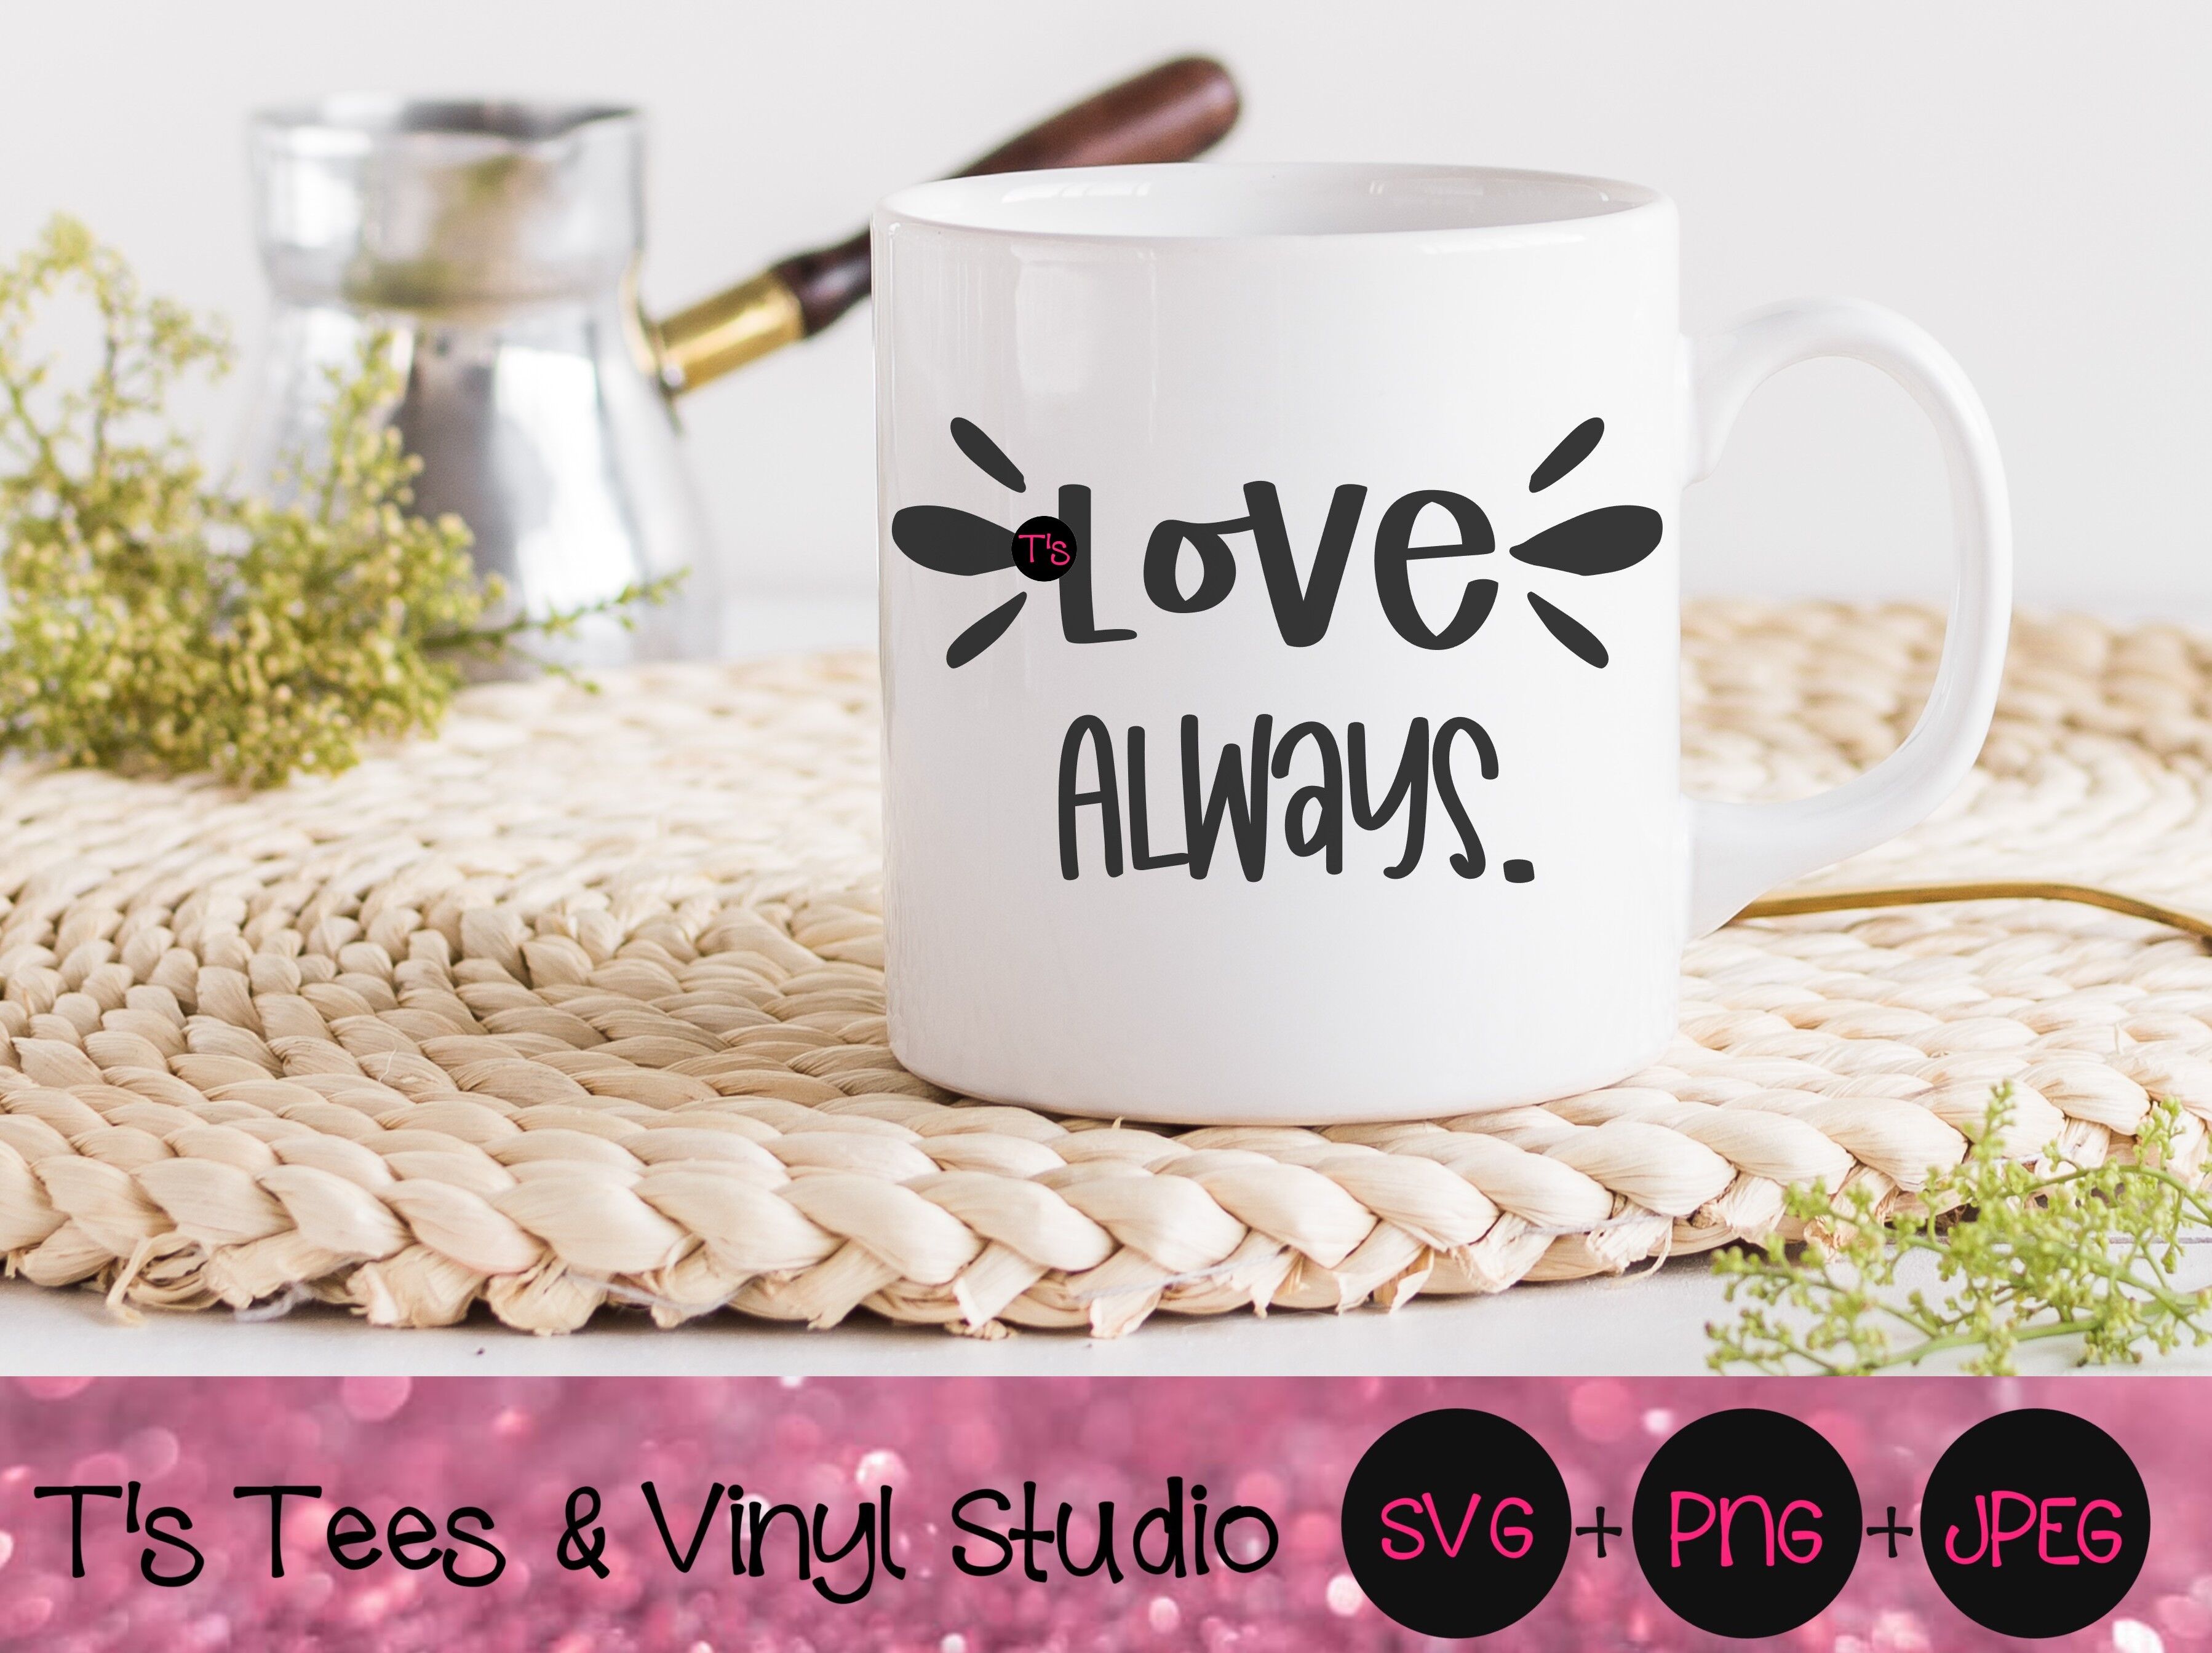 Love Svg Love Always Svg Choose Love Svg Love Png Love Always Png By T S Tees Vinyl Studio Thehungryjpeg Com